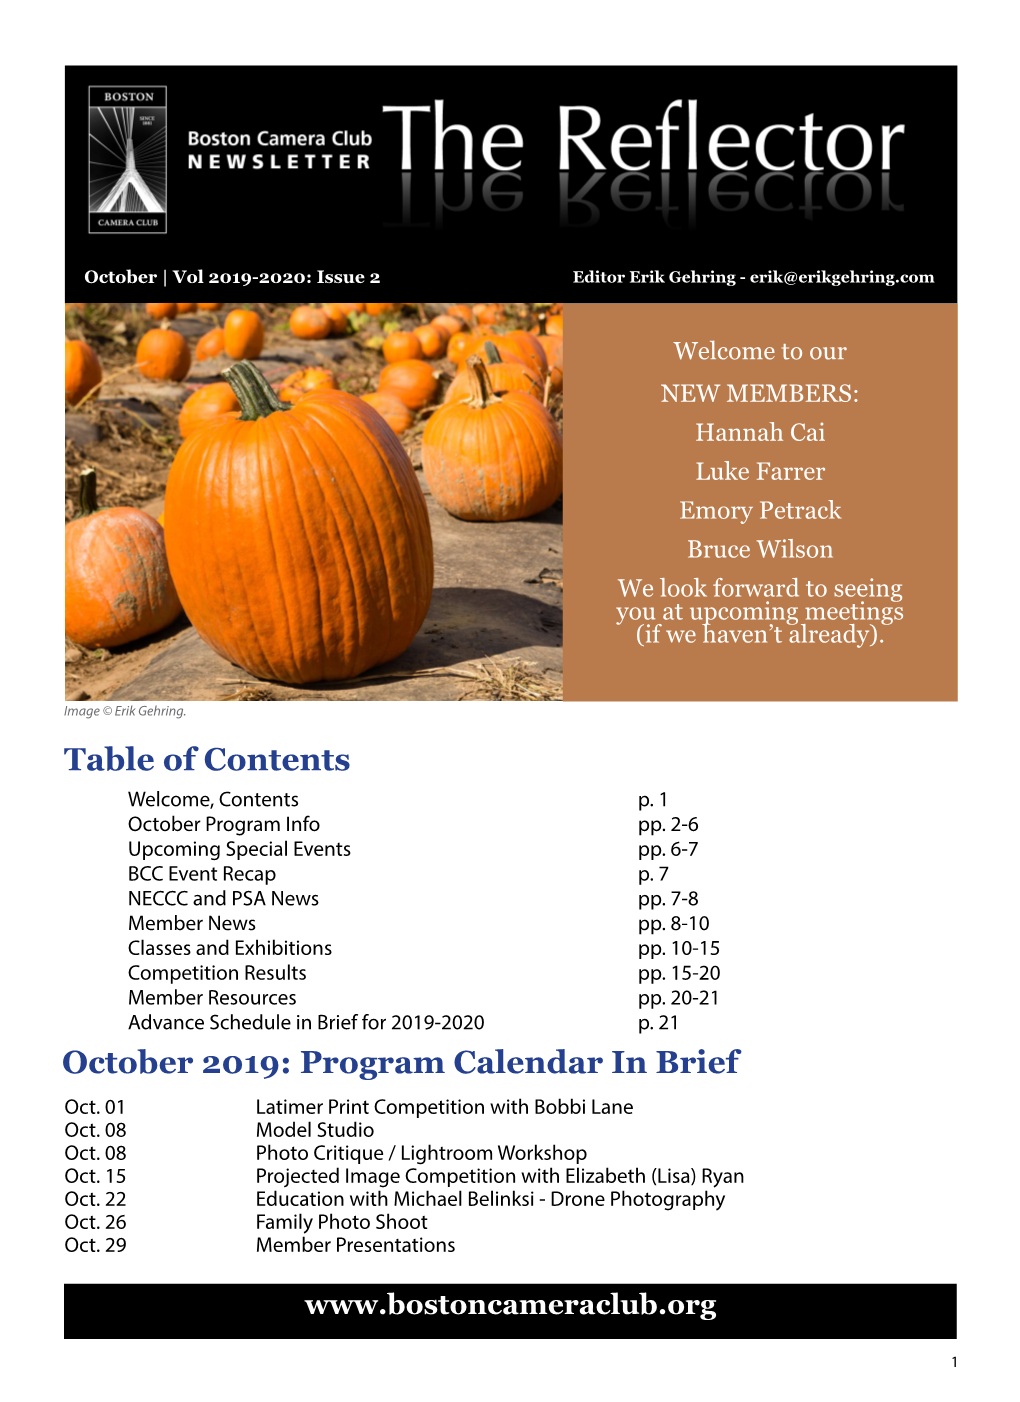 Table of Contents October 2019: Program Calendar in Brief